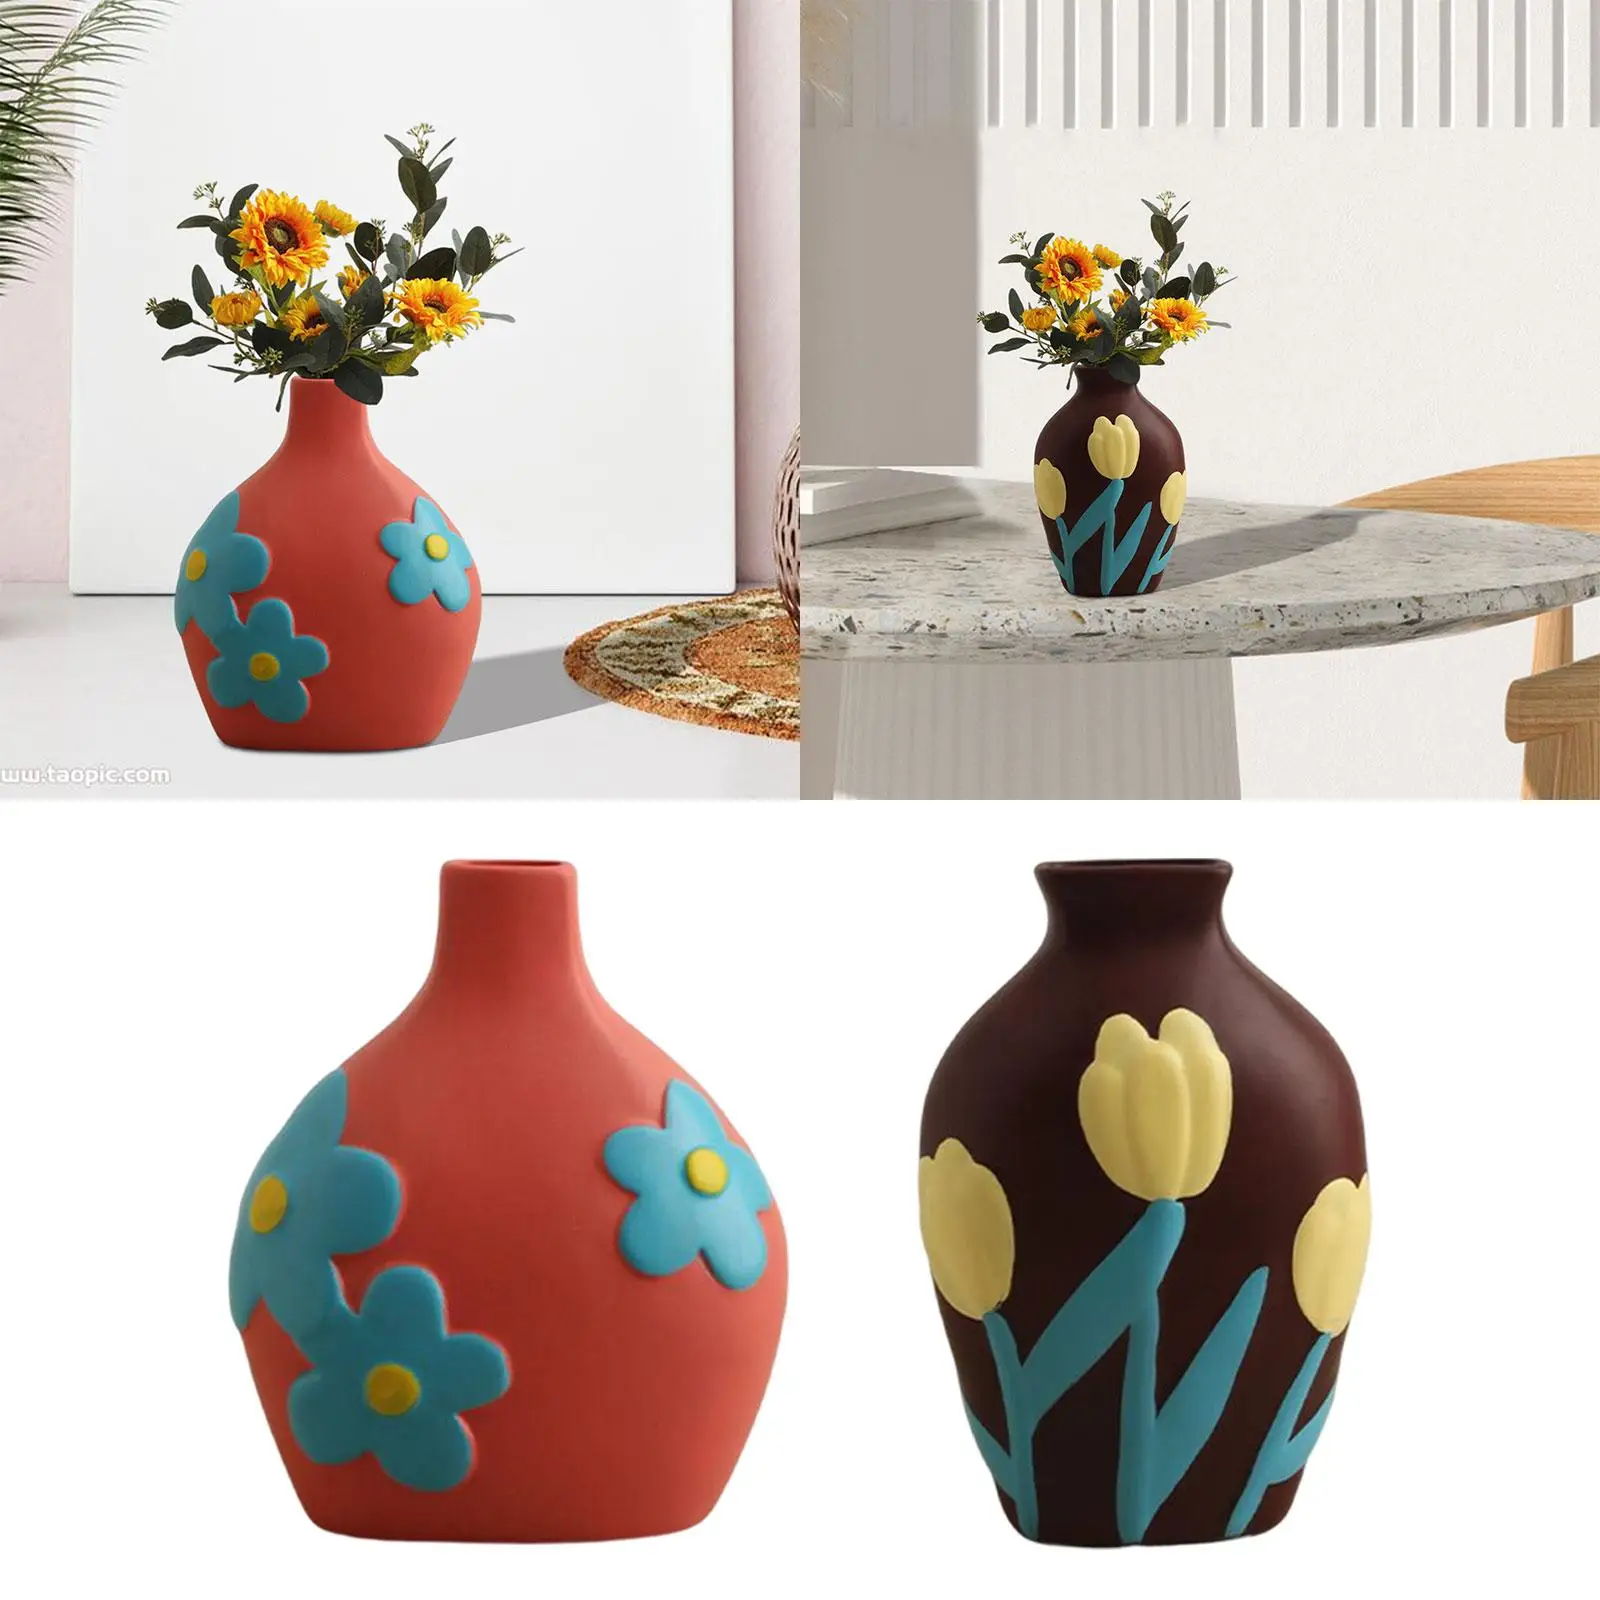 Flower Vase Planter Bottle Tabletop Sculptures Decorative Photo Props Crafts Pot for Home Wedding Dining Room Living Room Party